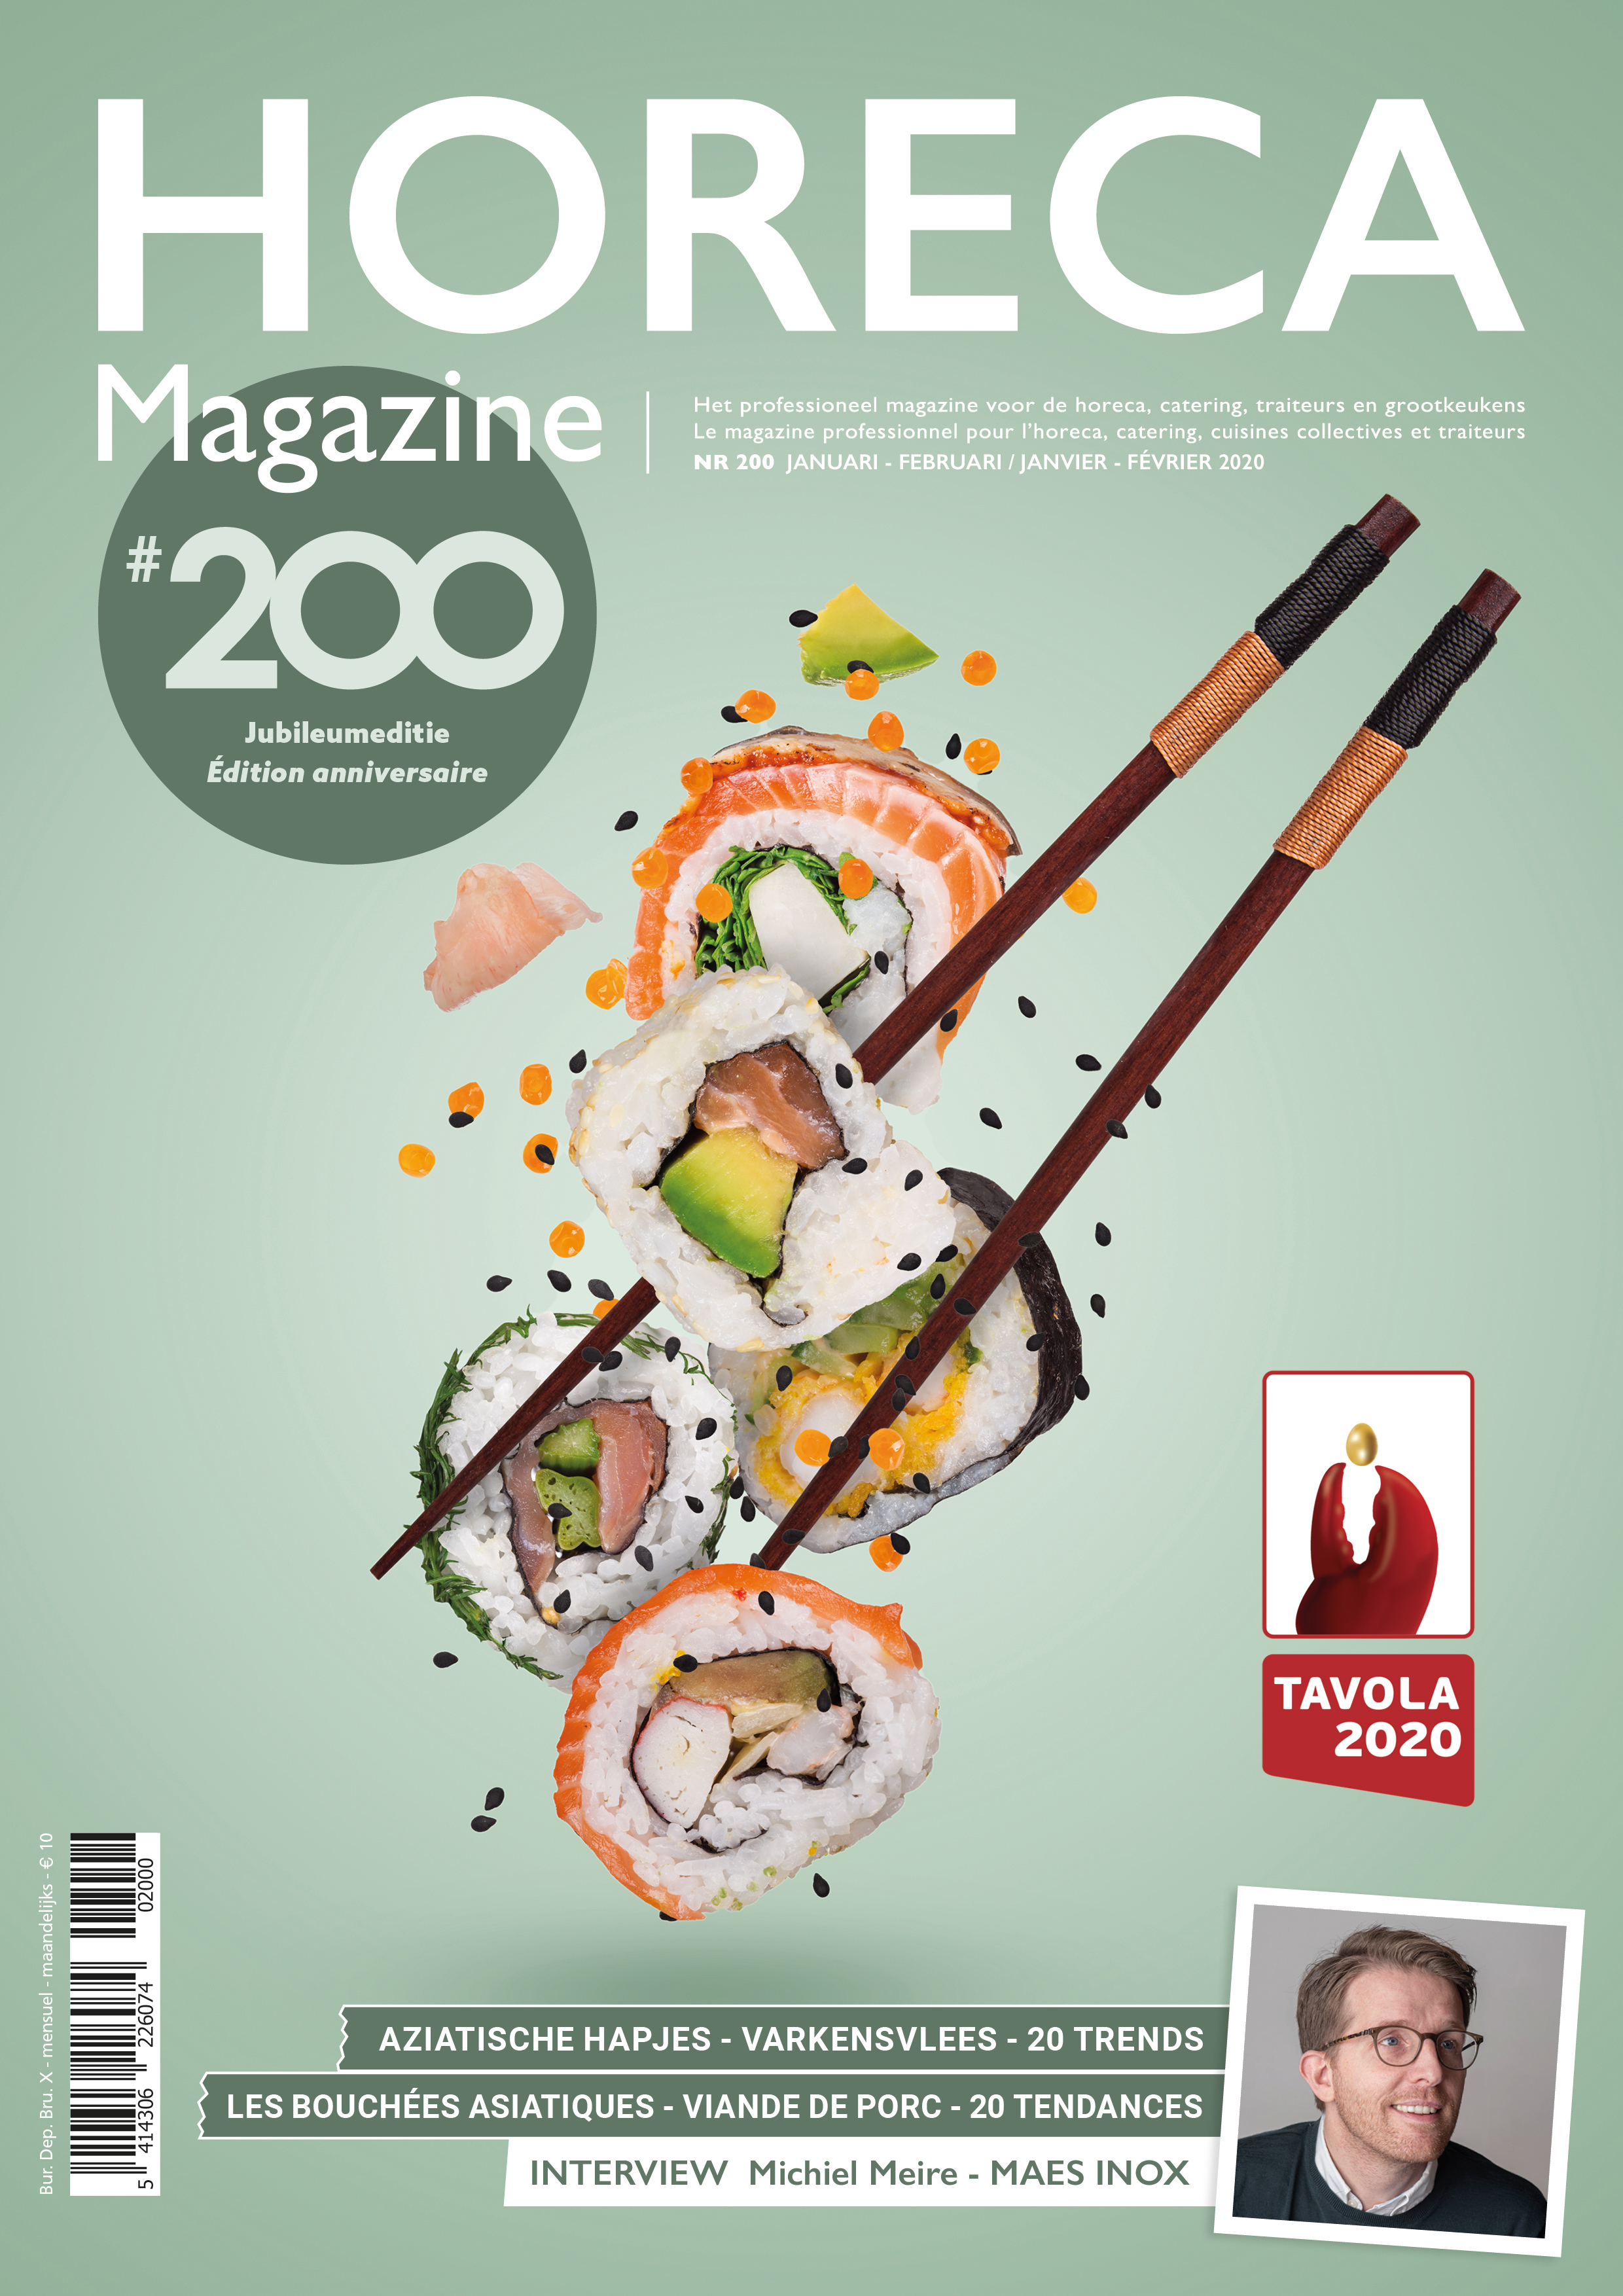 Horeca Magazine #200 janvier-février